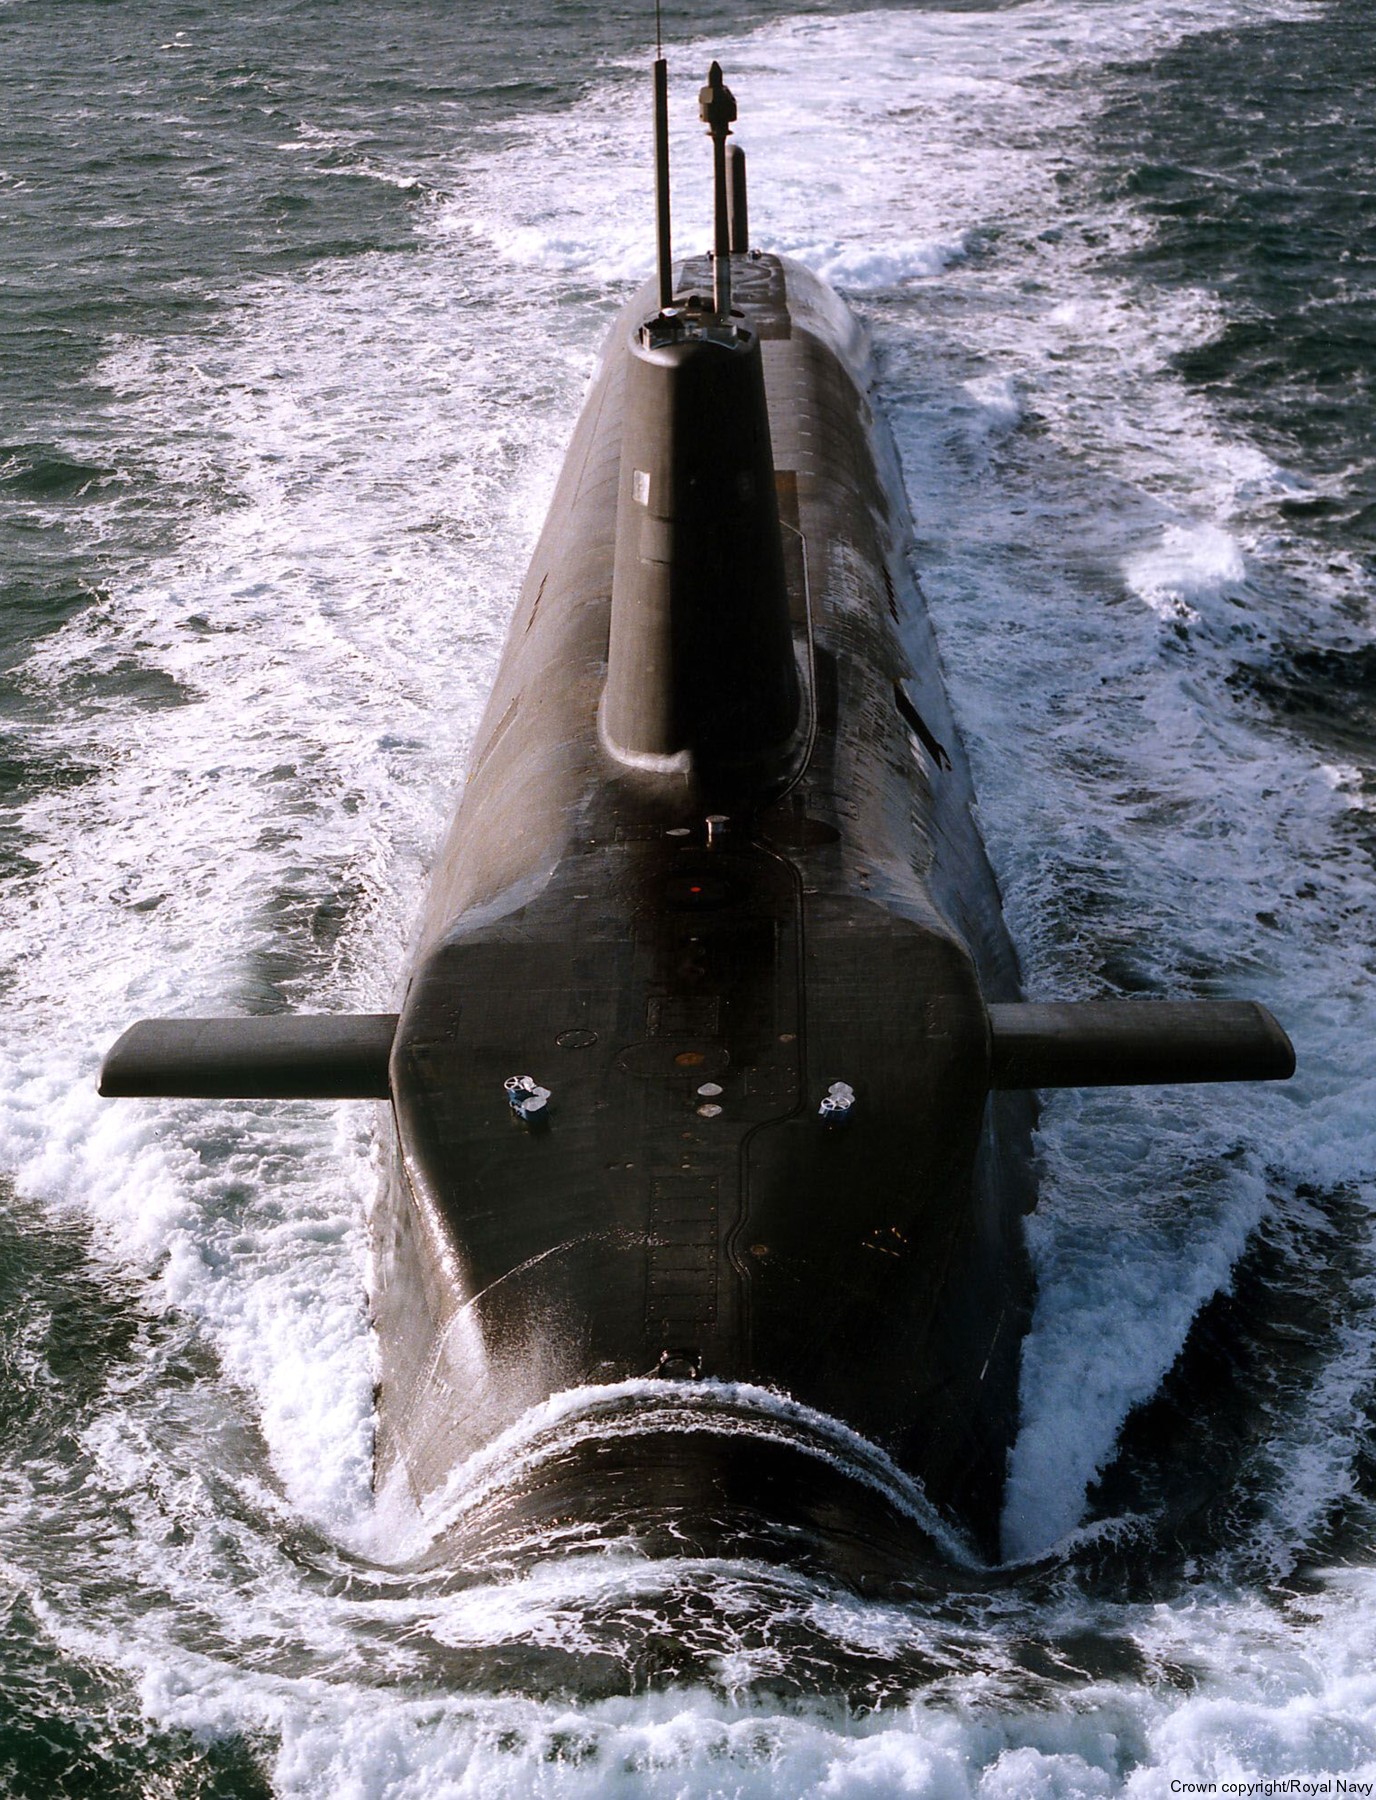 vanguard class ballistic missile submarine ssbn nuclear trident slbm royal navy 04c